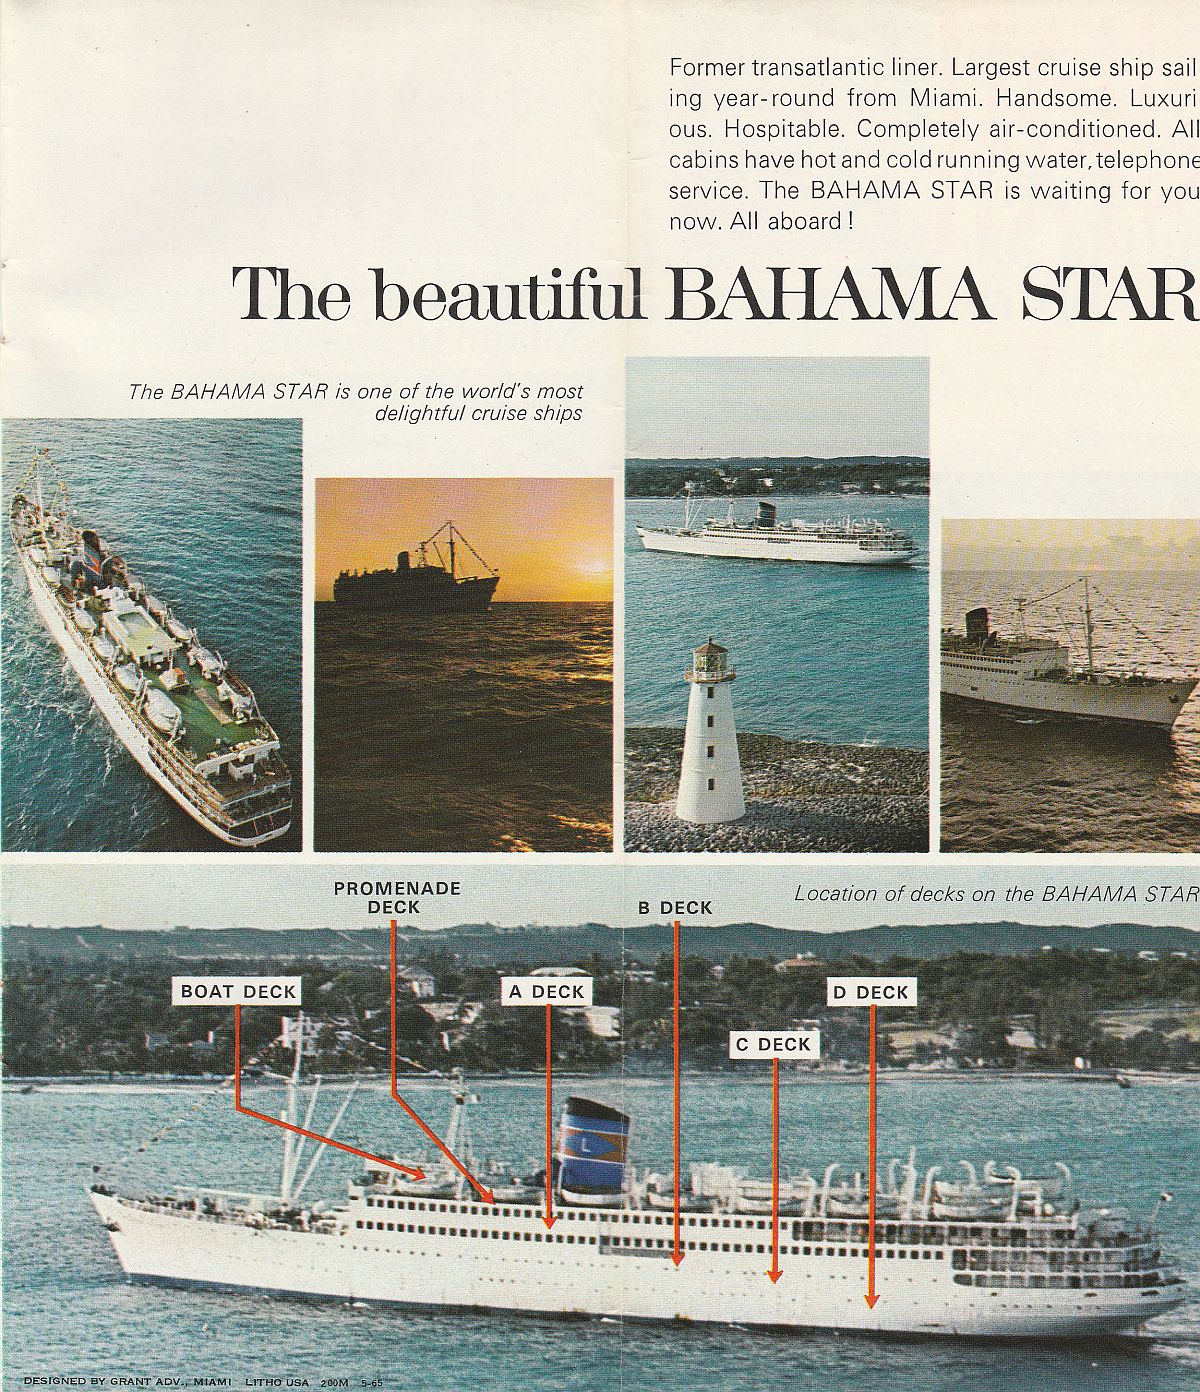 ss Bahama Star Exterior photos: The beautiful Bahama Star